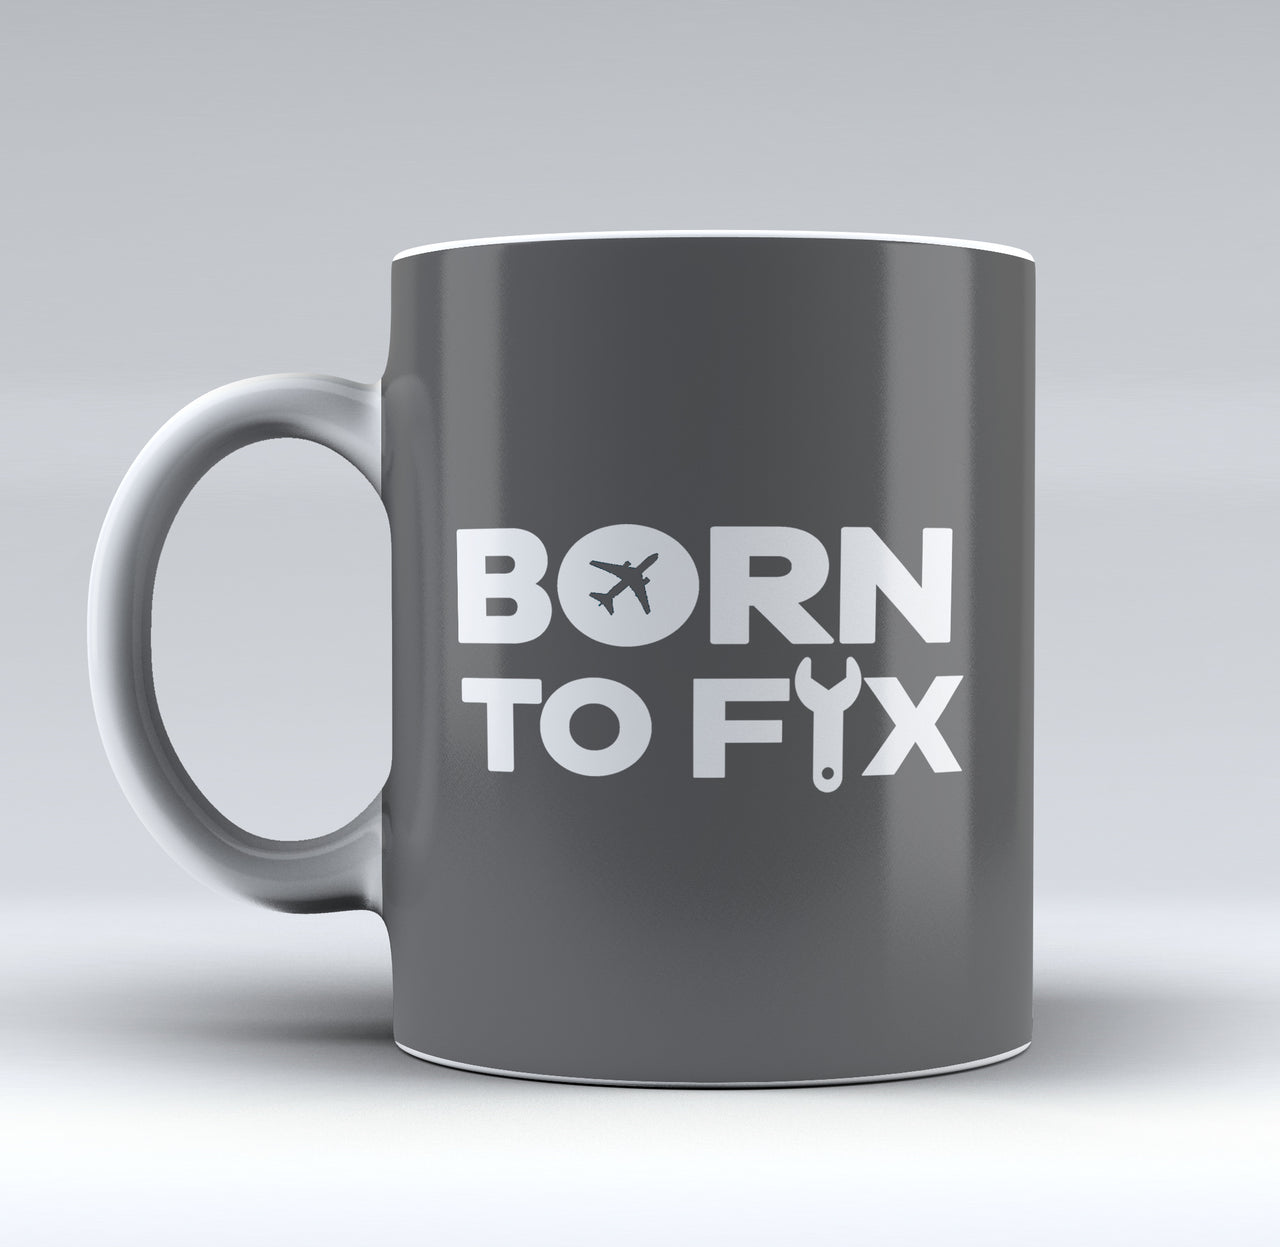 Born To Fix Airplanes Designed Mugs